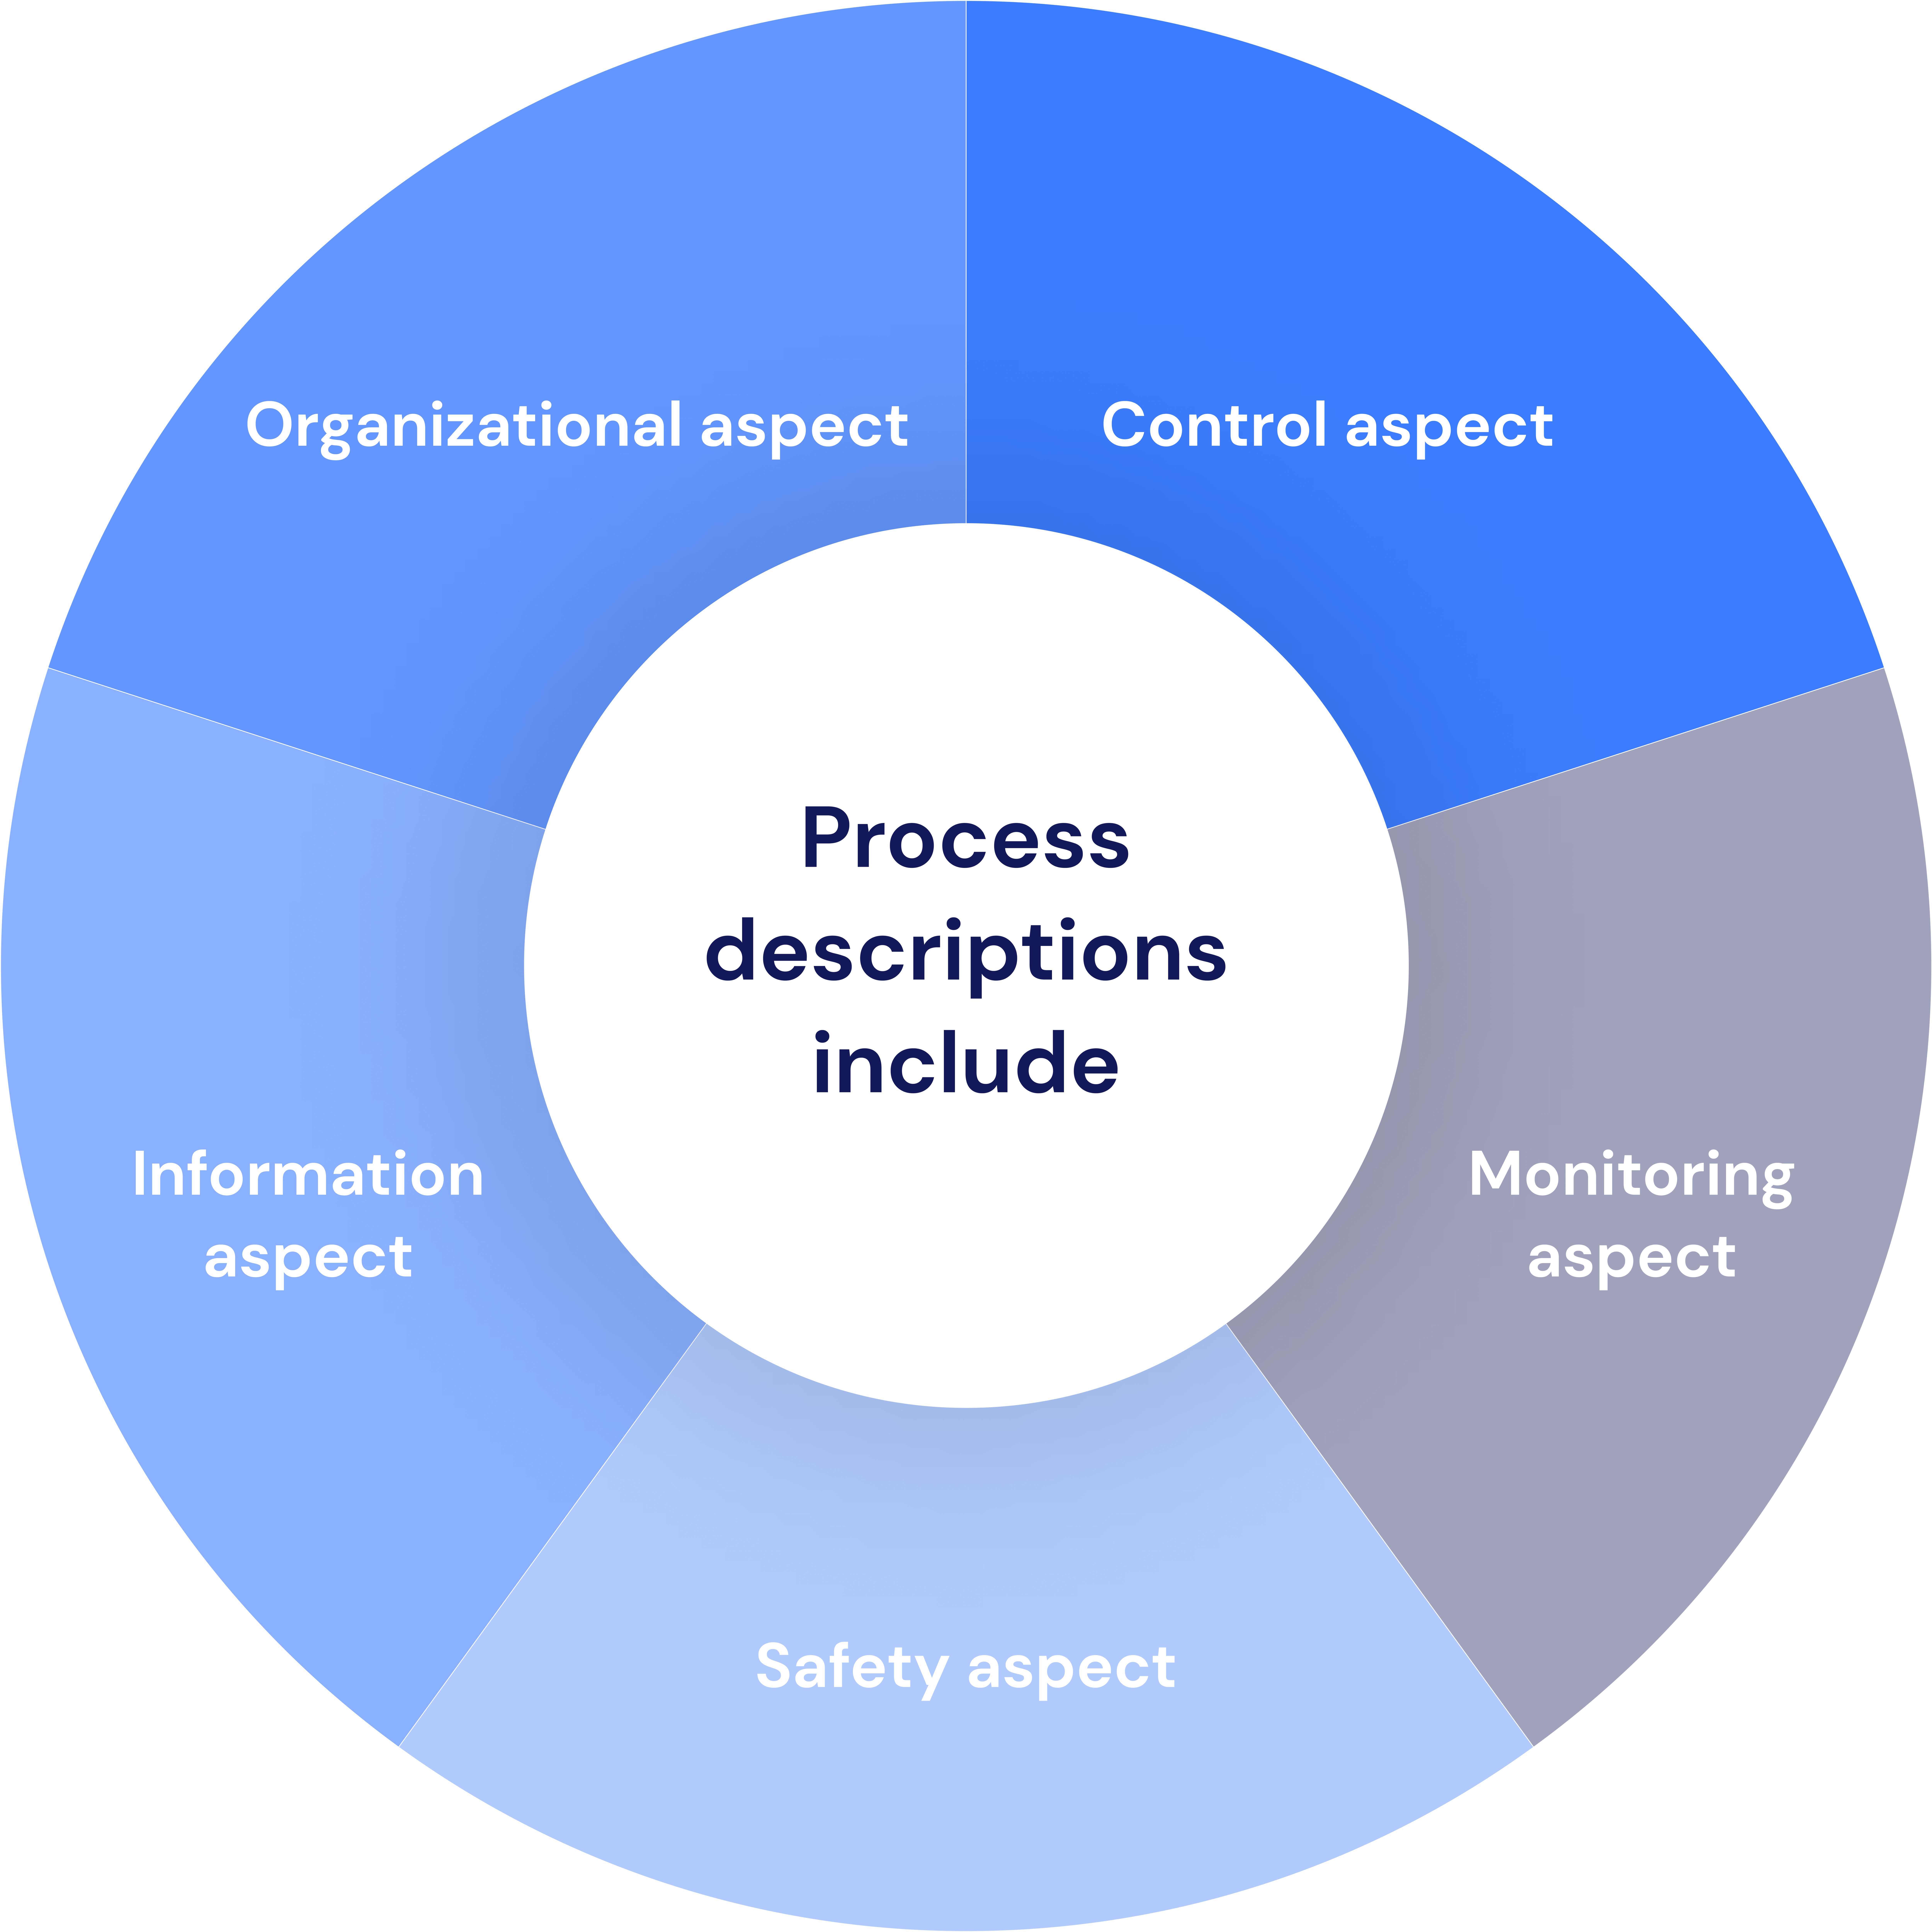 Higher-level aspects of a process description